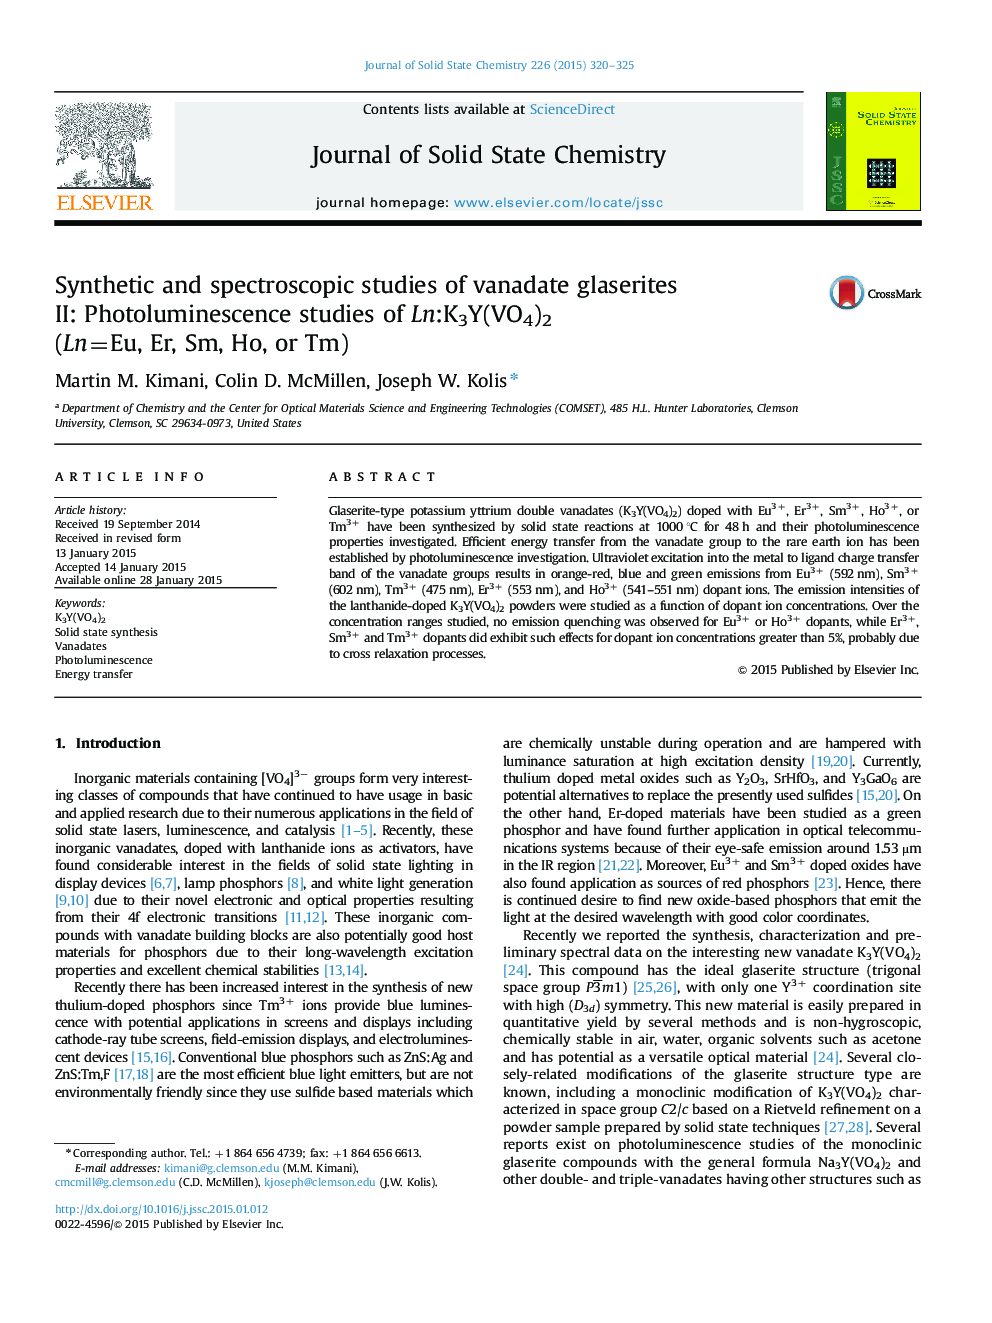 Synthetic and spectroscopic studies of vanadate glaserites II: Photoluminescence studies of Ln:K3Y(VO4)2 (Ln=Eu, Er, Sm, Ho, or Tm)